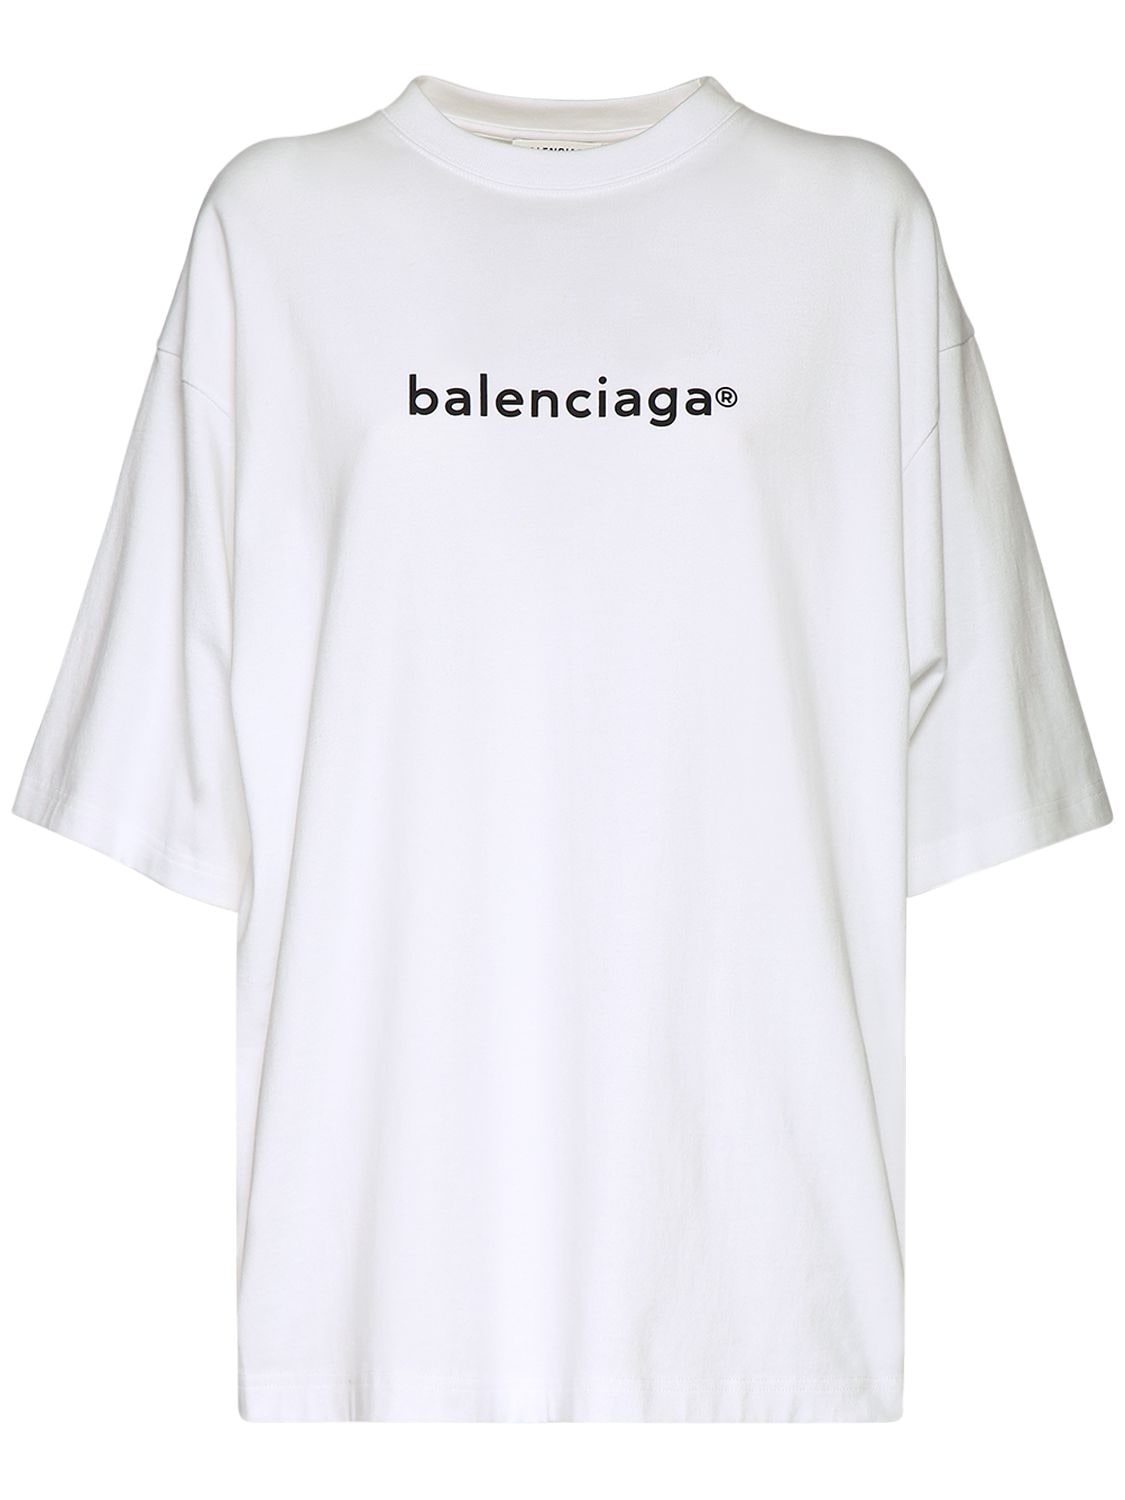 Matchesfashion Balenciaga Private Sale All 30% Off